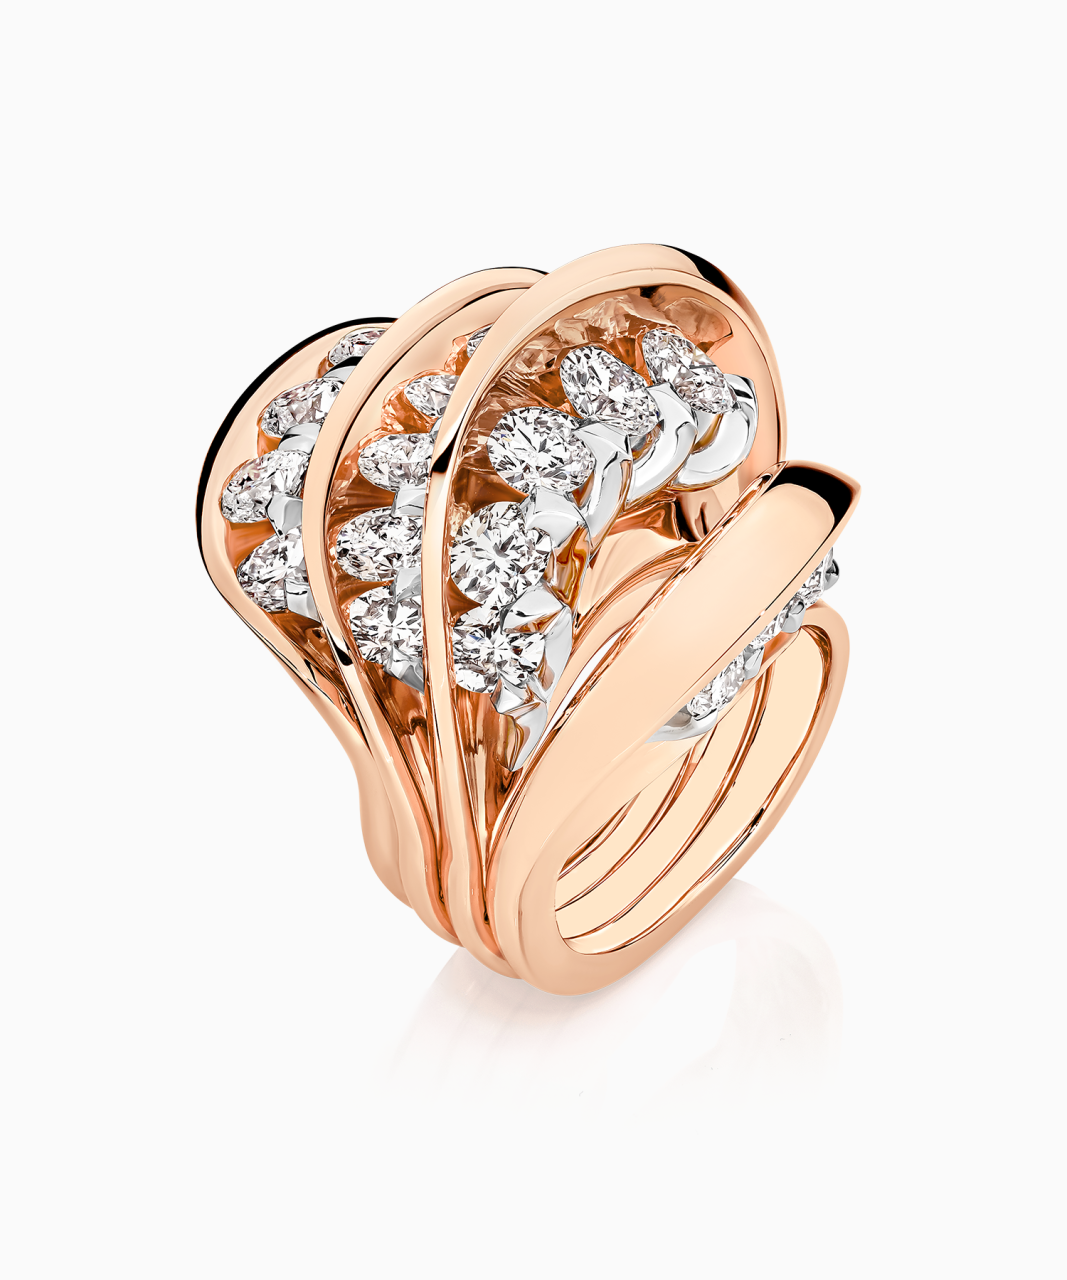 Bloom Award Winning Diamond Ring